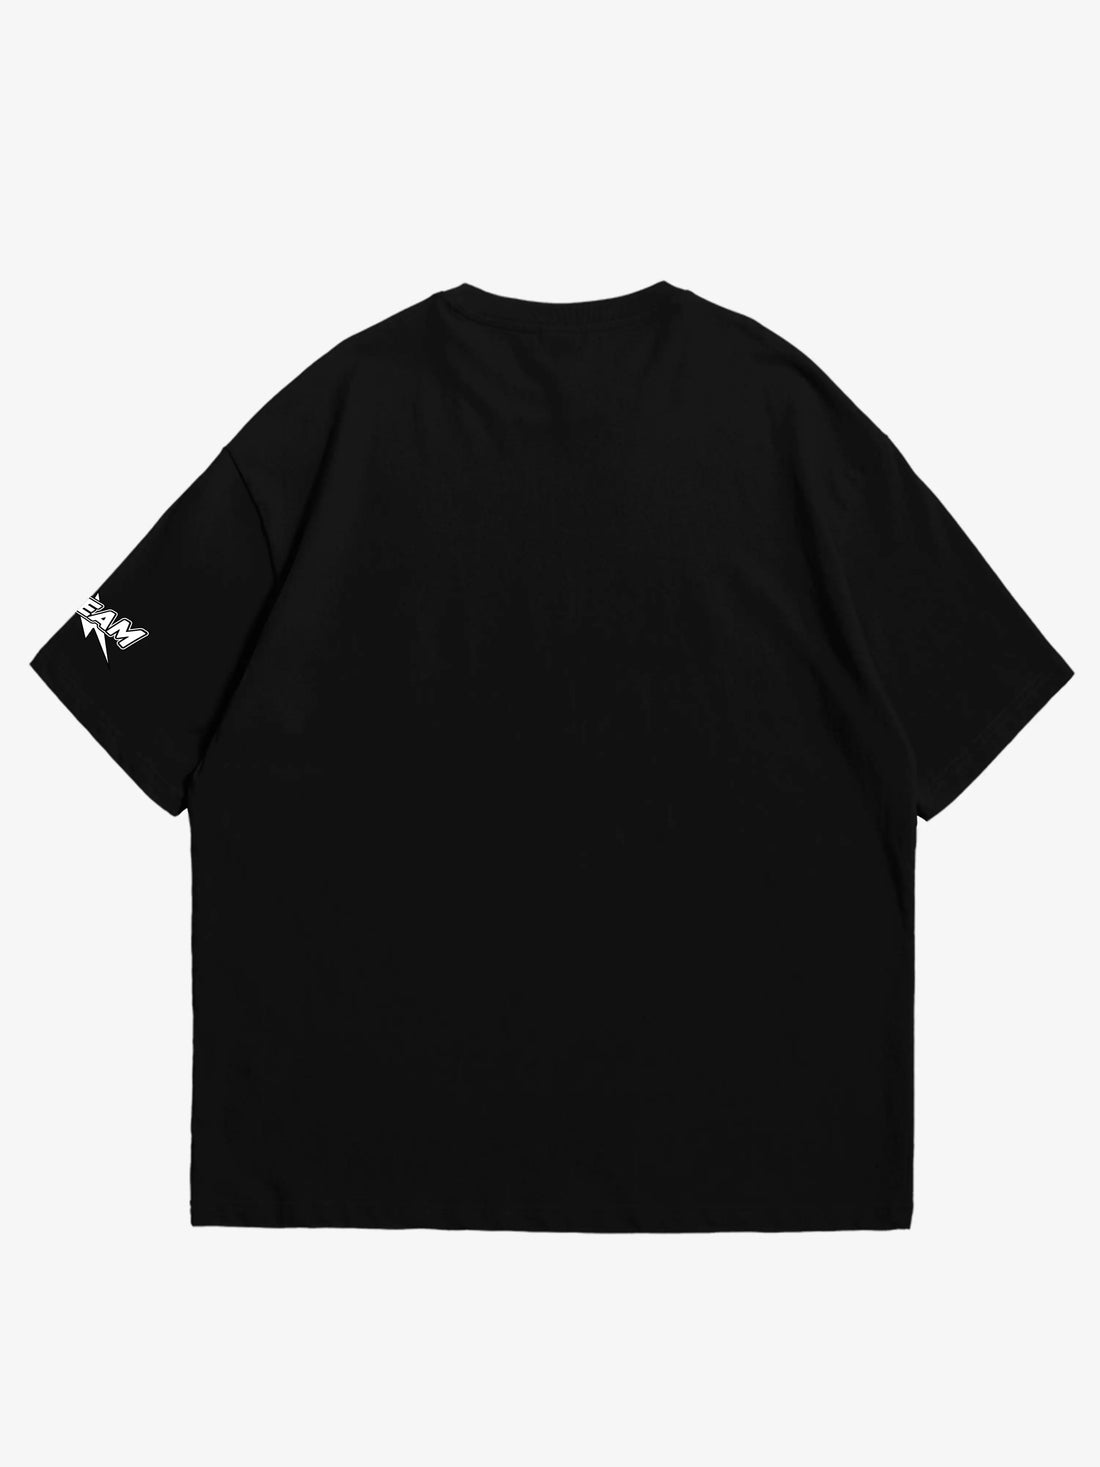 Black oversized T-shirt, explosive rock y2k print, skream streetwear t-shirt 